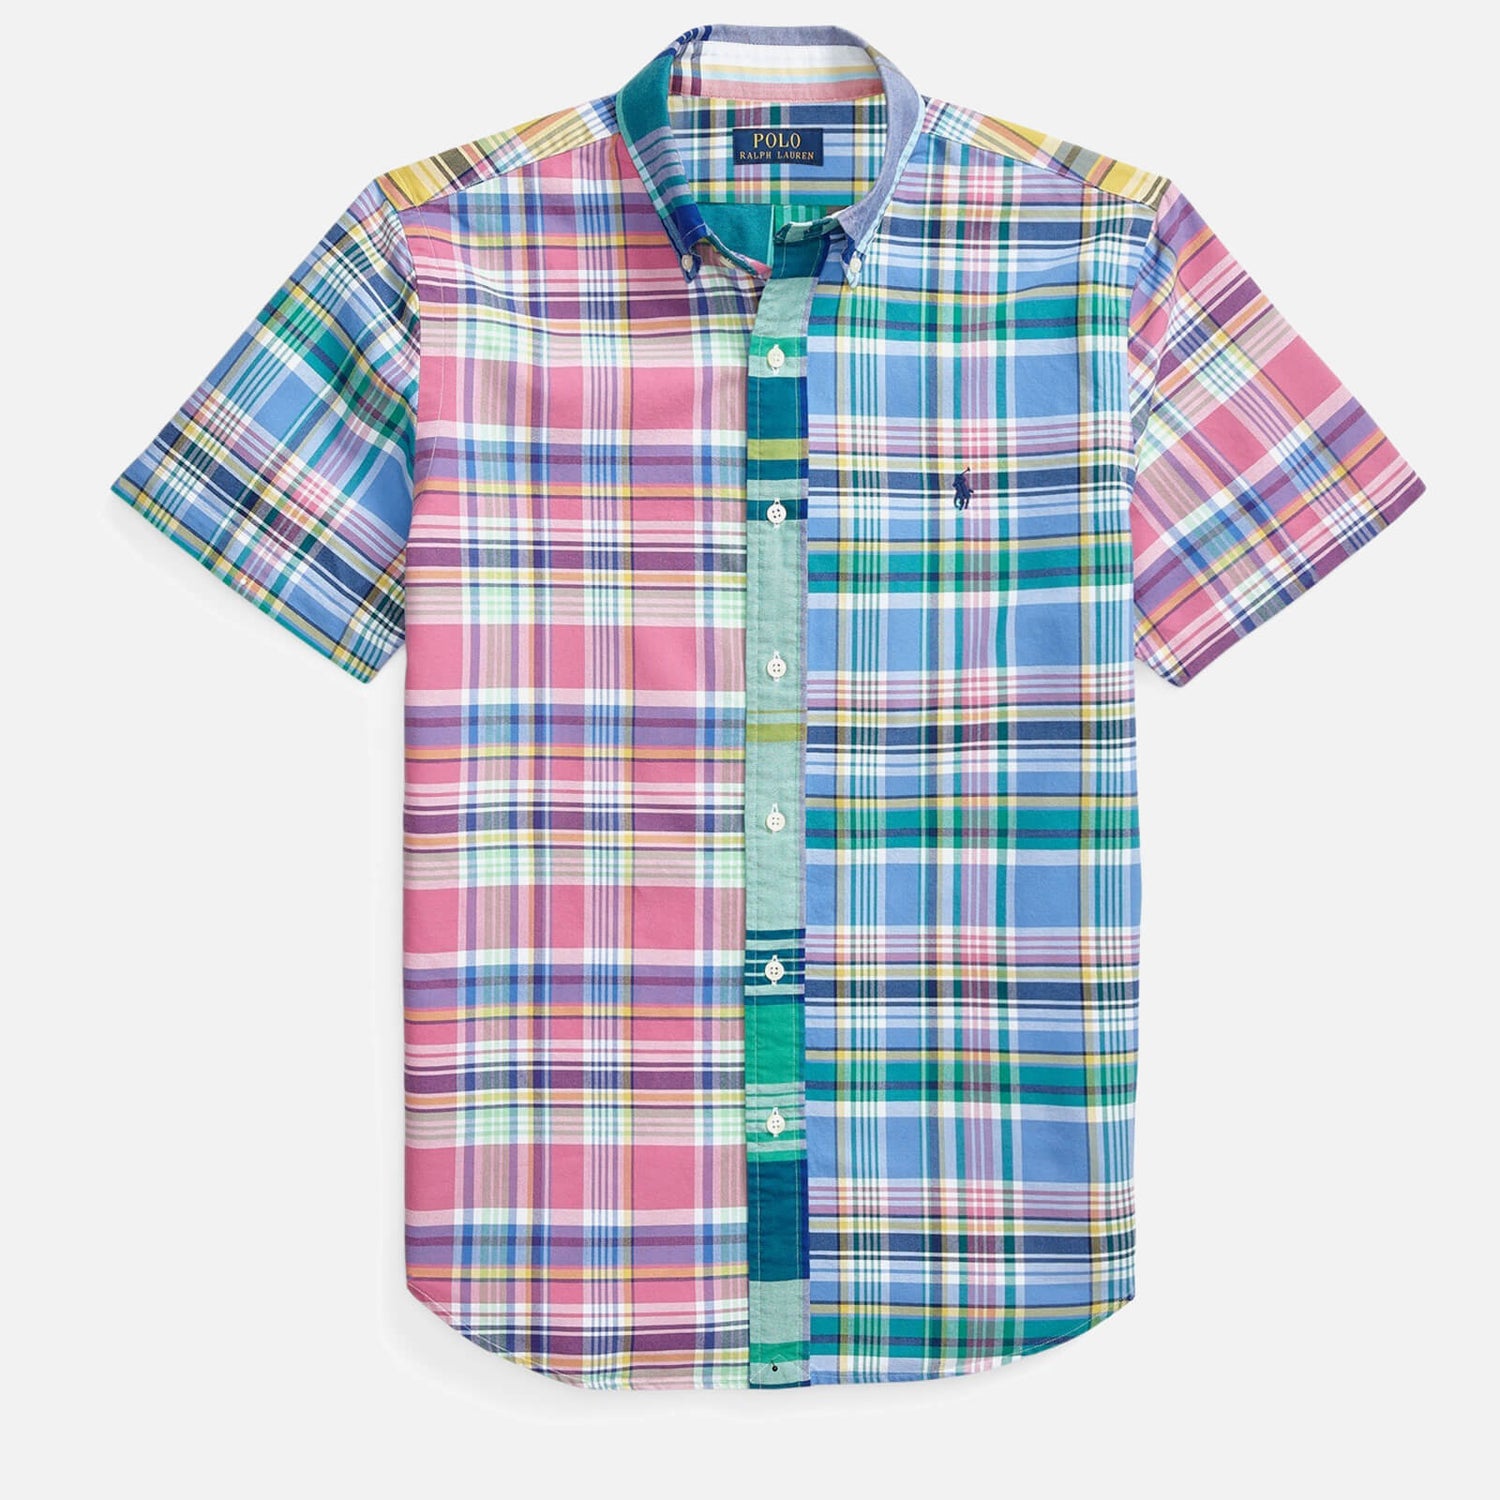 Polo Ralph Lauren Men's Oxford Short Sleeve Shirt - Preppy Multi Funshirt - S